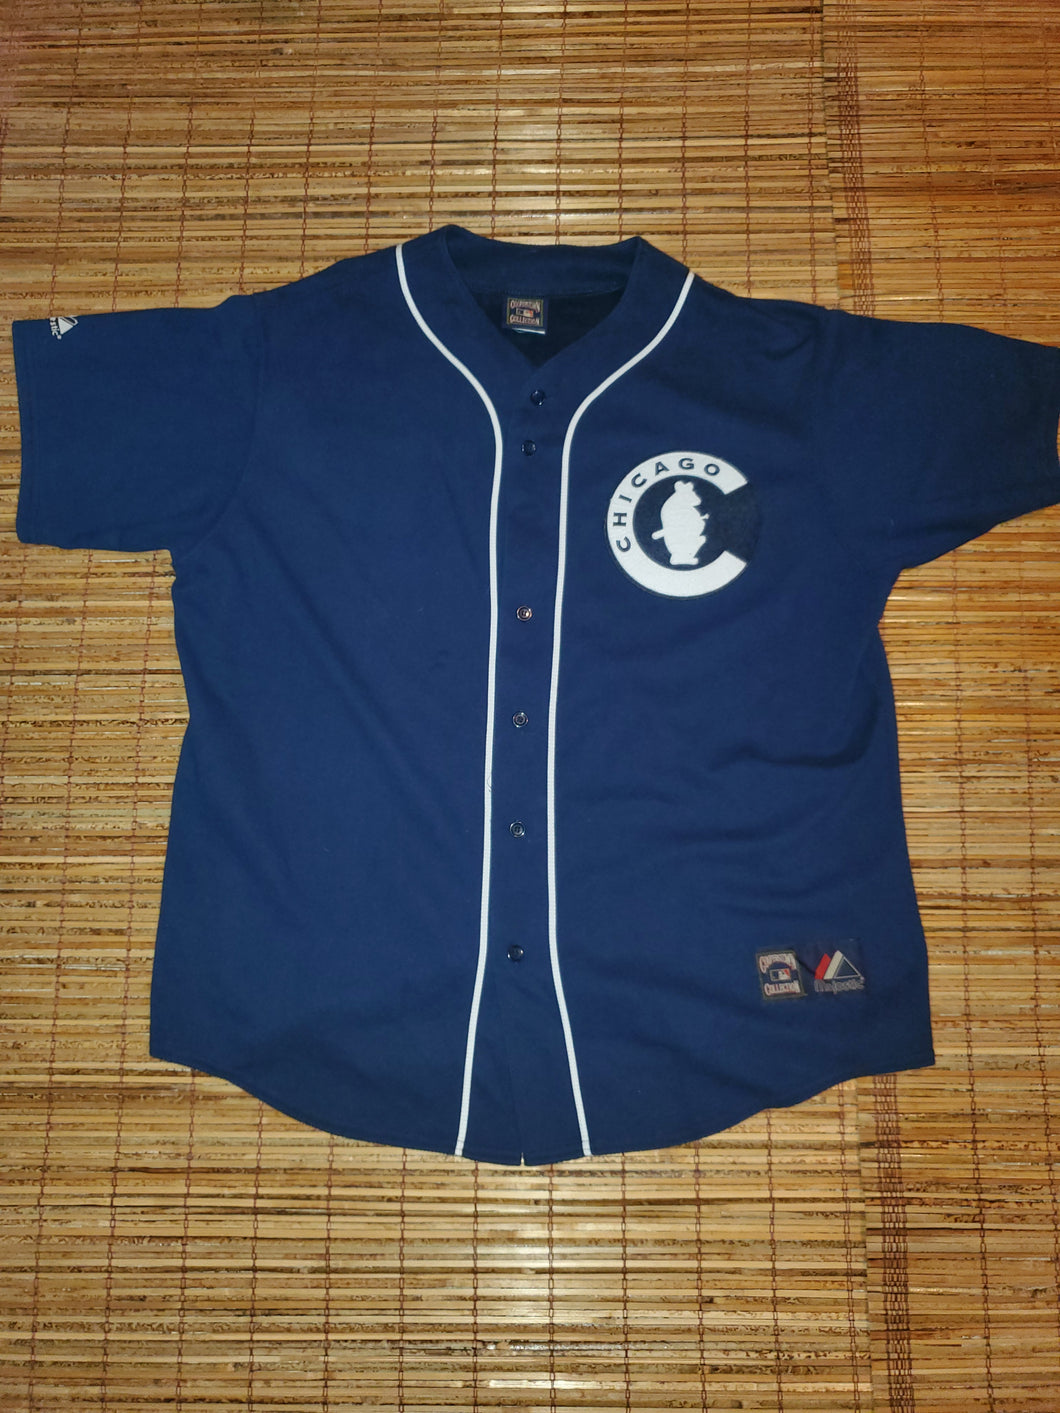 retro chicago cubs uniforms